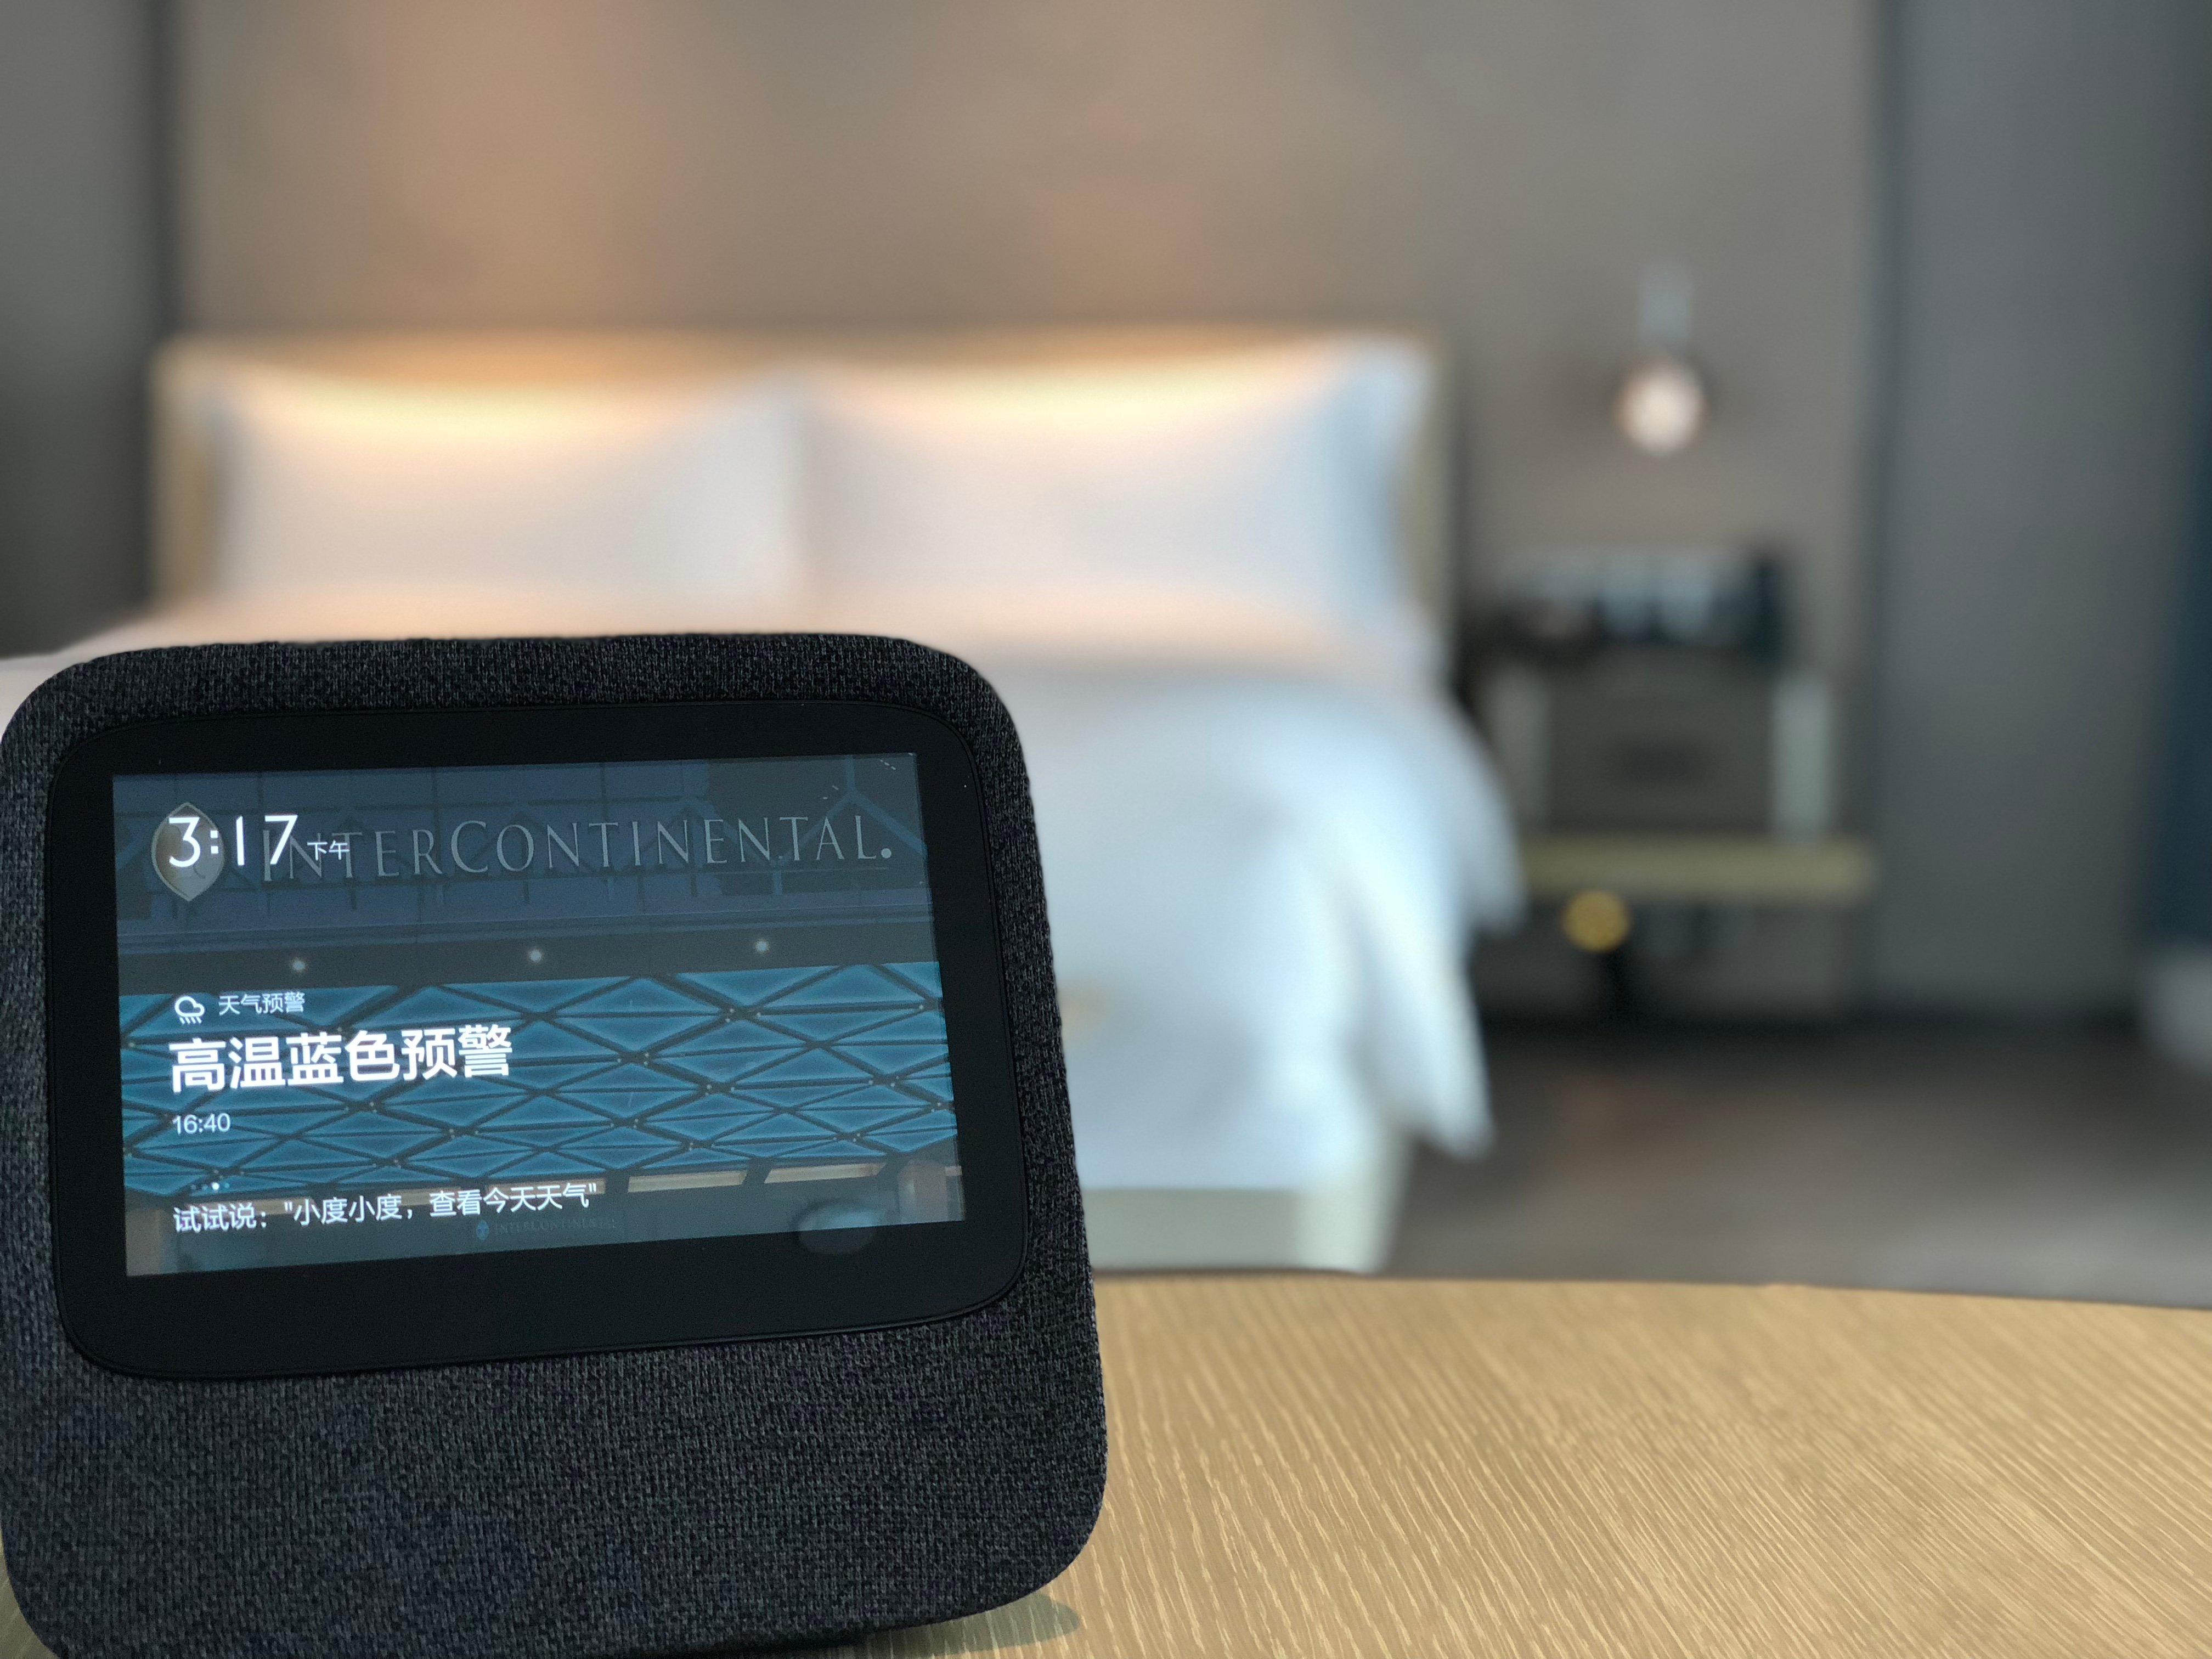 InterContinental Hotels smart rooms